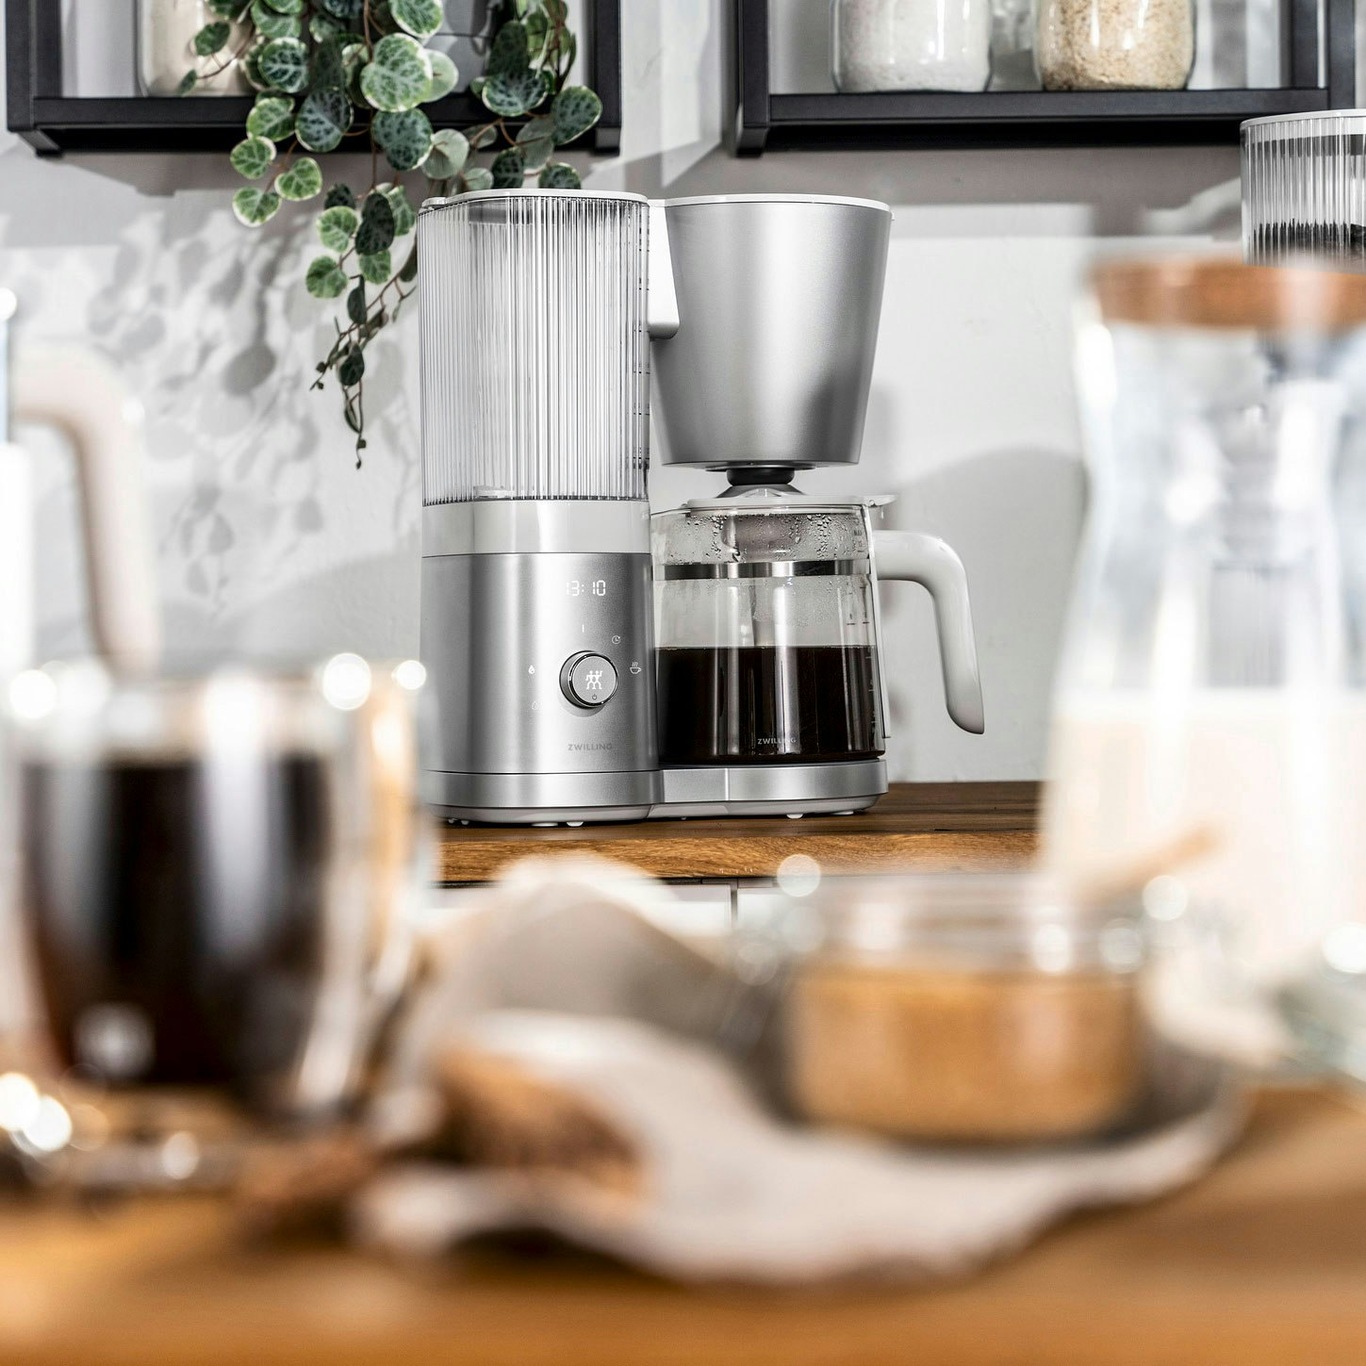 https://royaldesign.com/image/11/zwilling-enfinigy-coffee-maker-2?w=800&quality=80